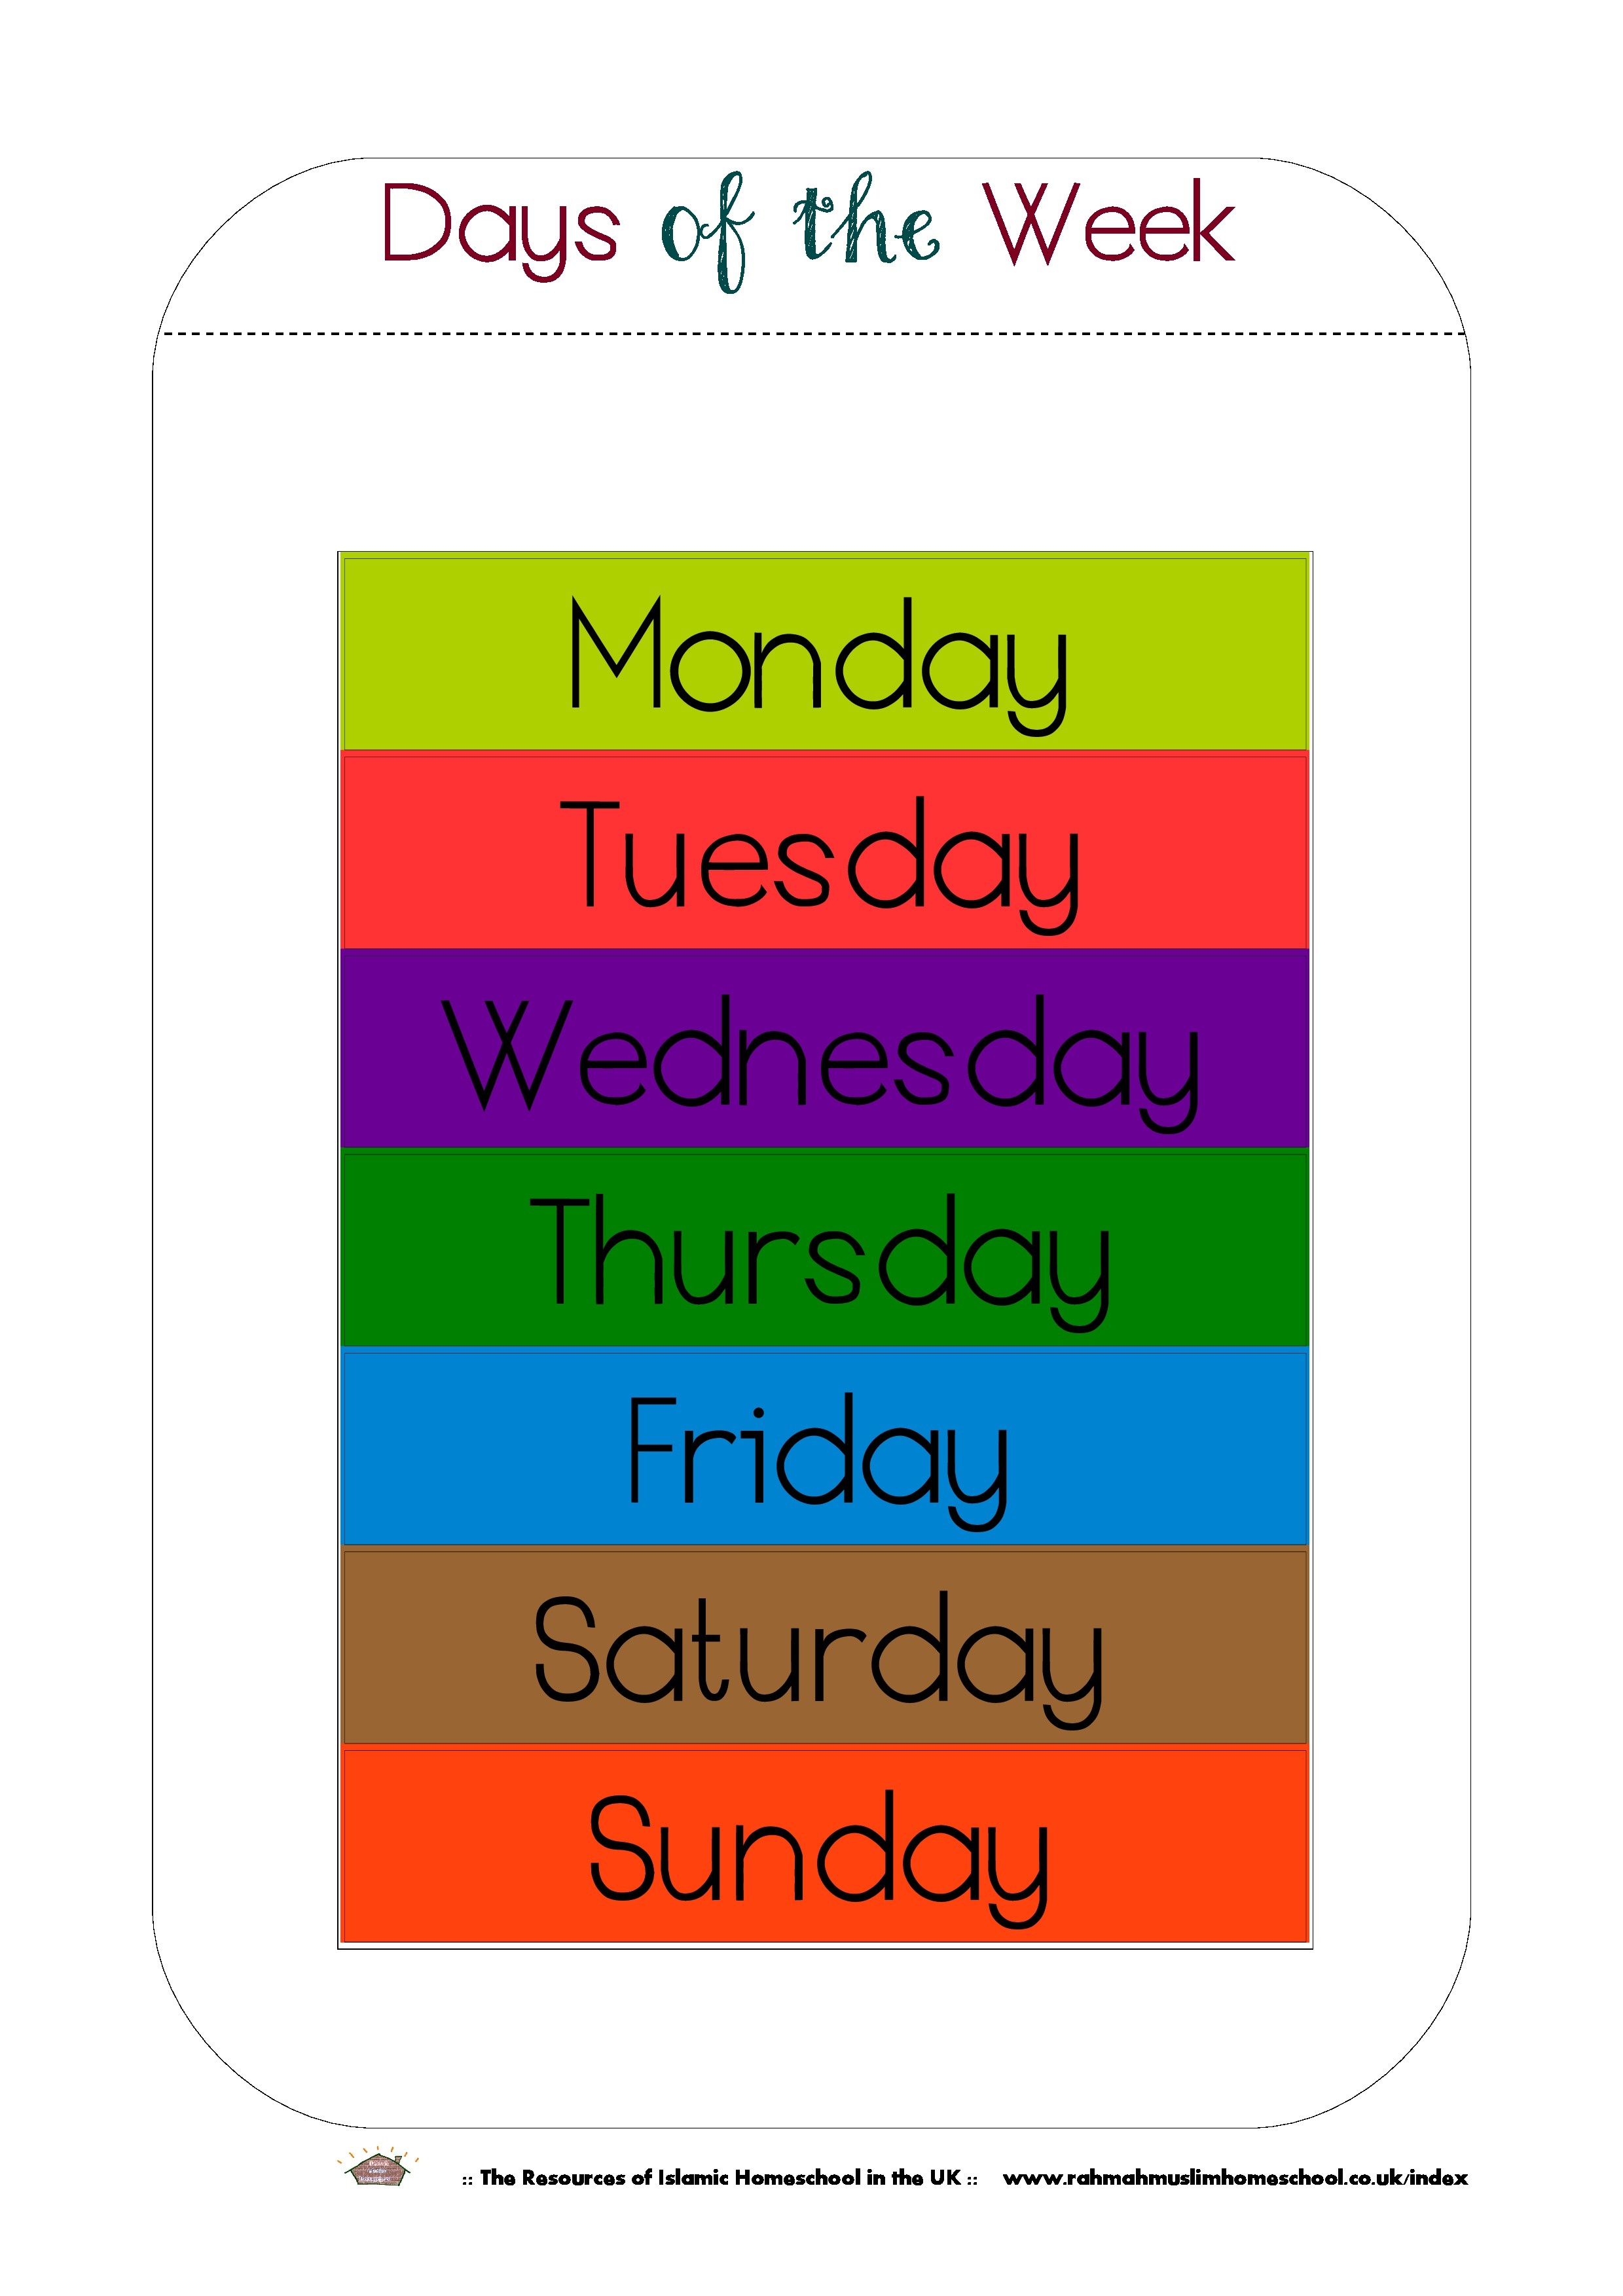 Free Printable Days Of The Week Workbook And Poster | The Resources - Free Printable Days Of The Week